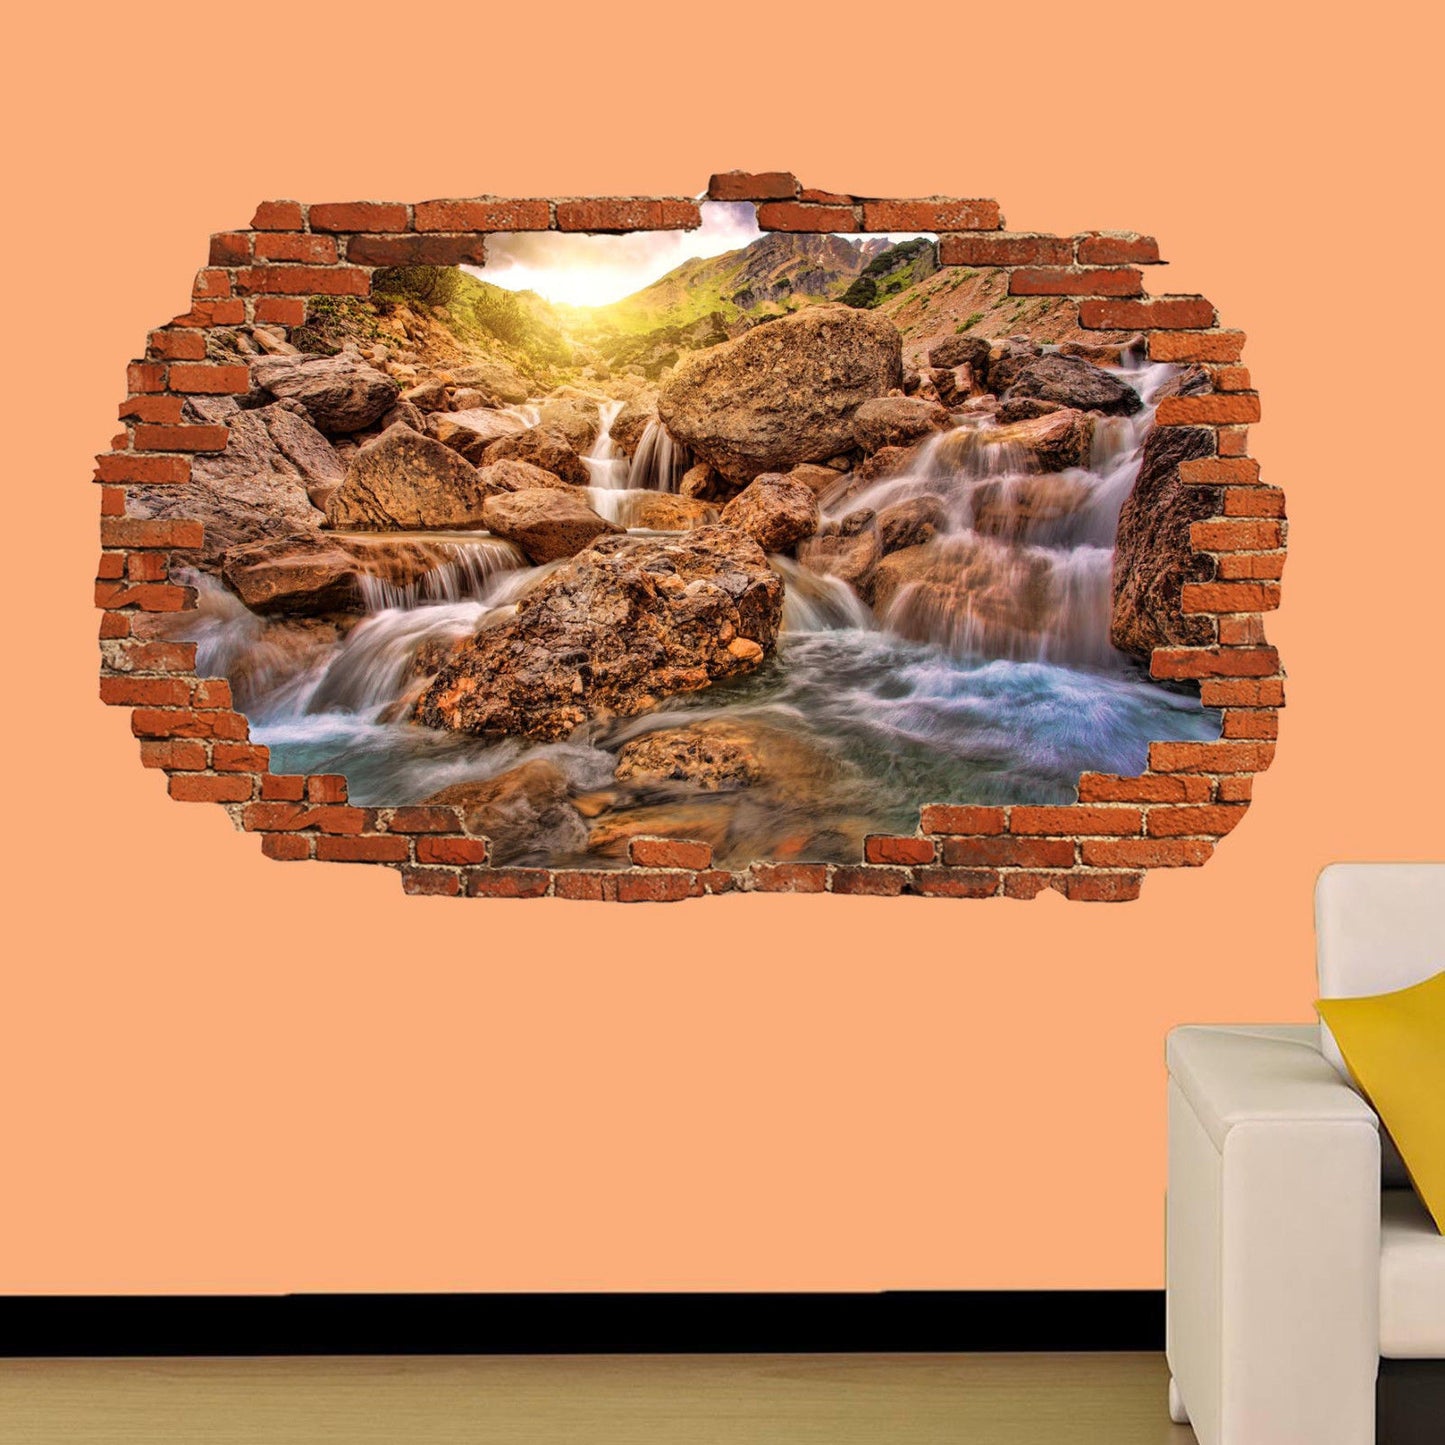 Stream River Sun Waterfall Wall Stickers 3d Art Mural Room Office Shop Decor SB7